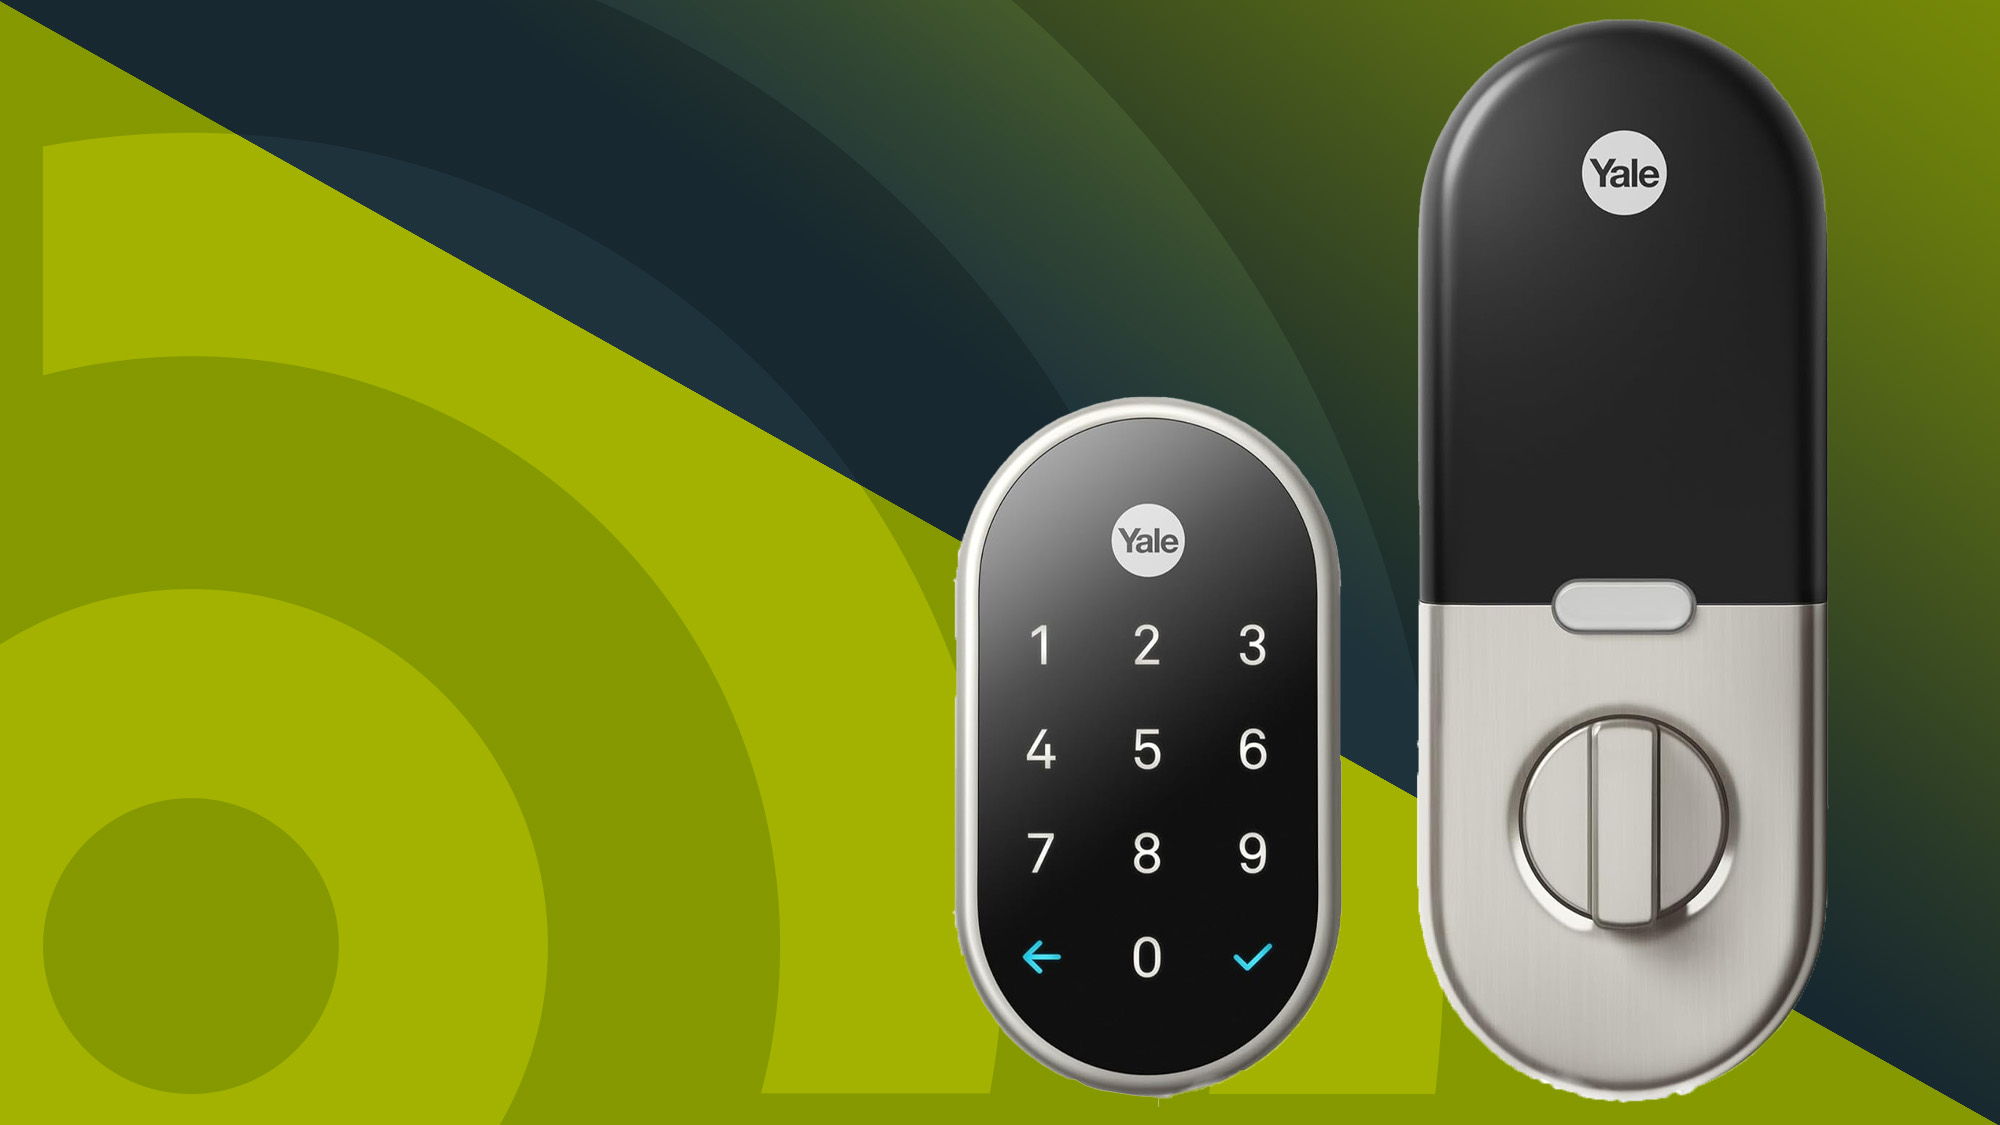 Buy Nuki Keypad Smartphone & Keyless Access online Worldwide 